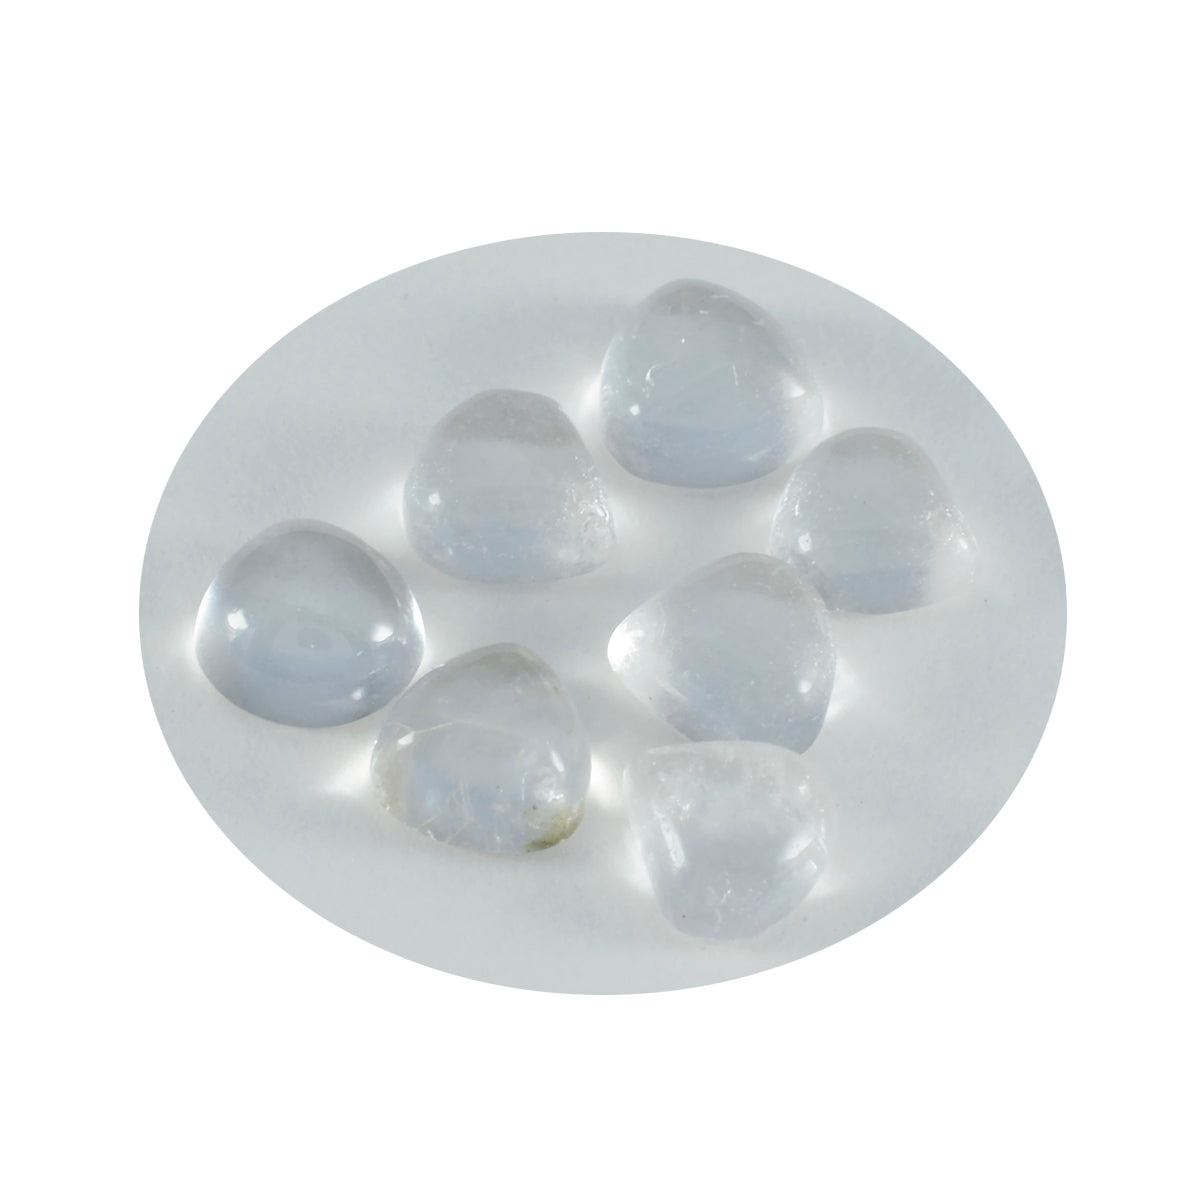 Riyogems 1PC White Crystal Quartz Cabochon 10x10 mm Heart Shape A Quality Loose Gemstone